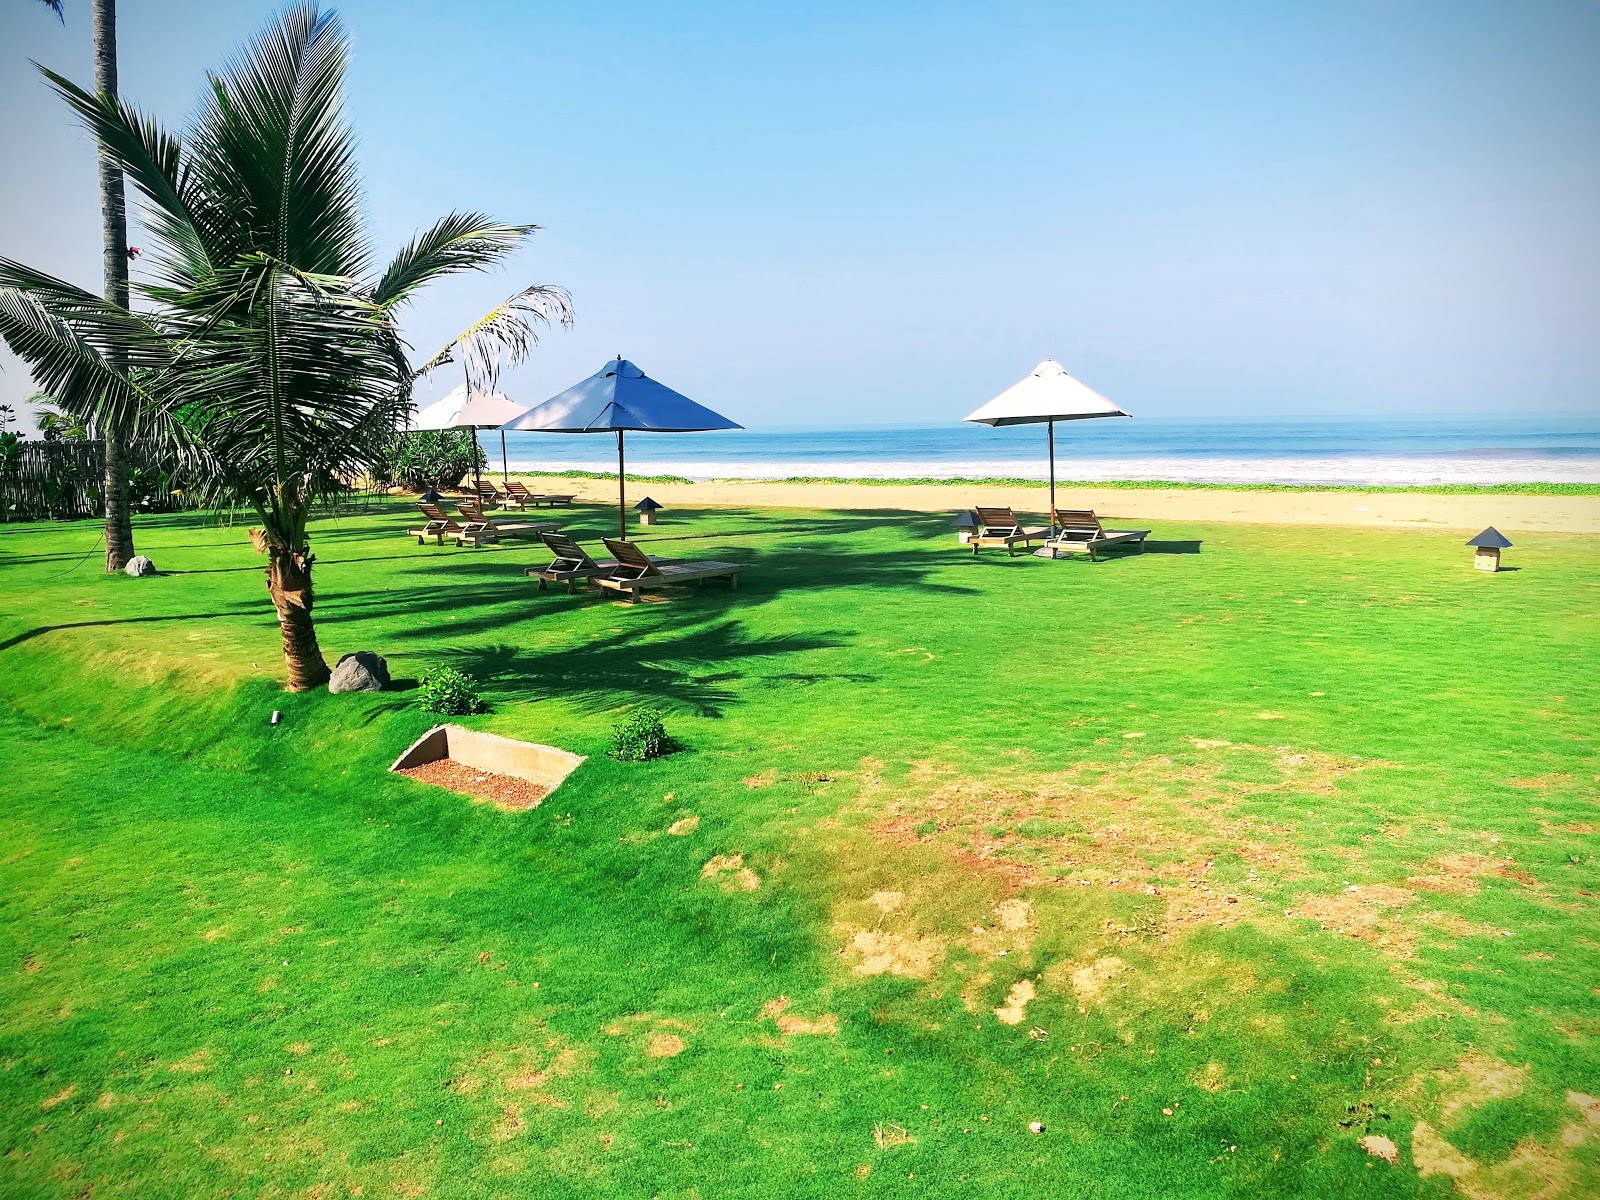 Foto de Dolphin hotel beach - lugar popular entre os apreciadores de relaxamento